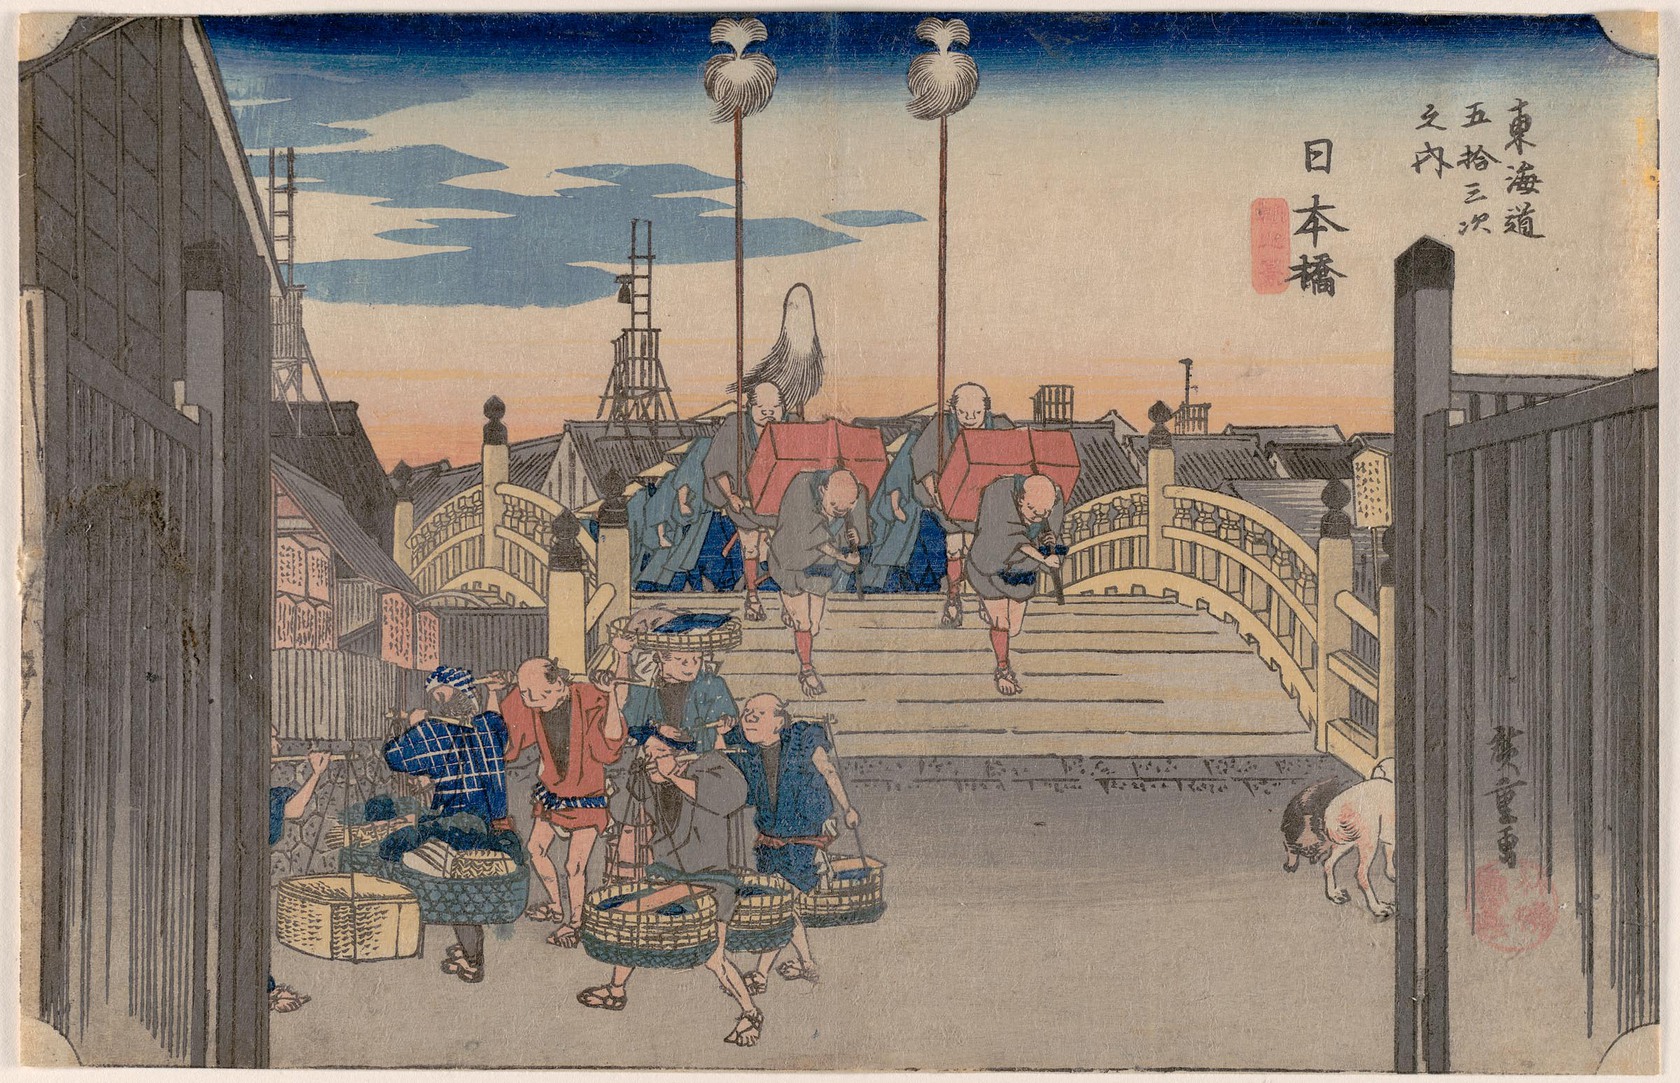 A print showing people on foot carrying heavy loads across a bridge.